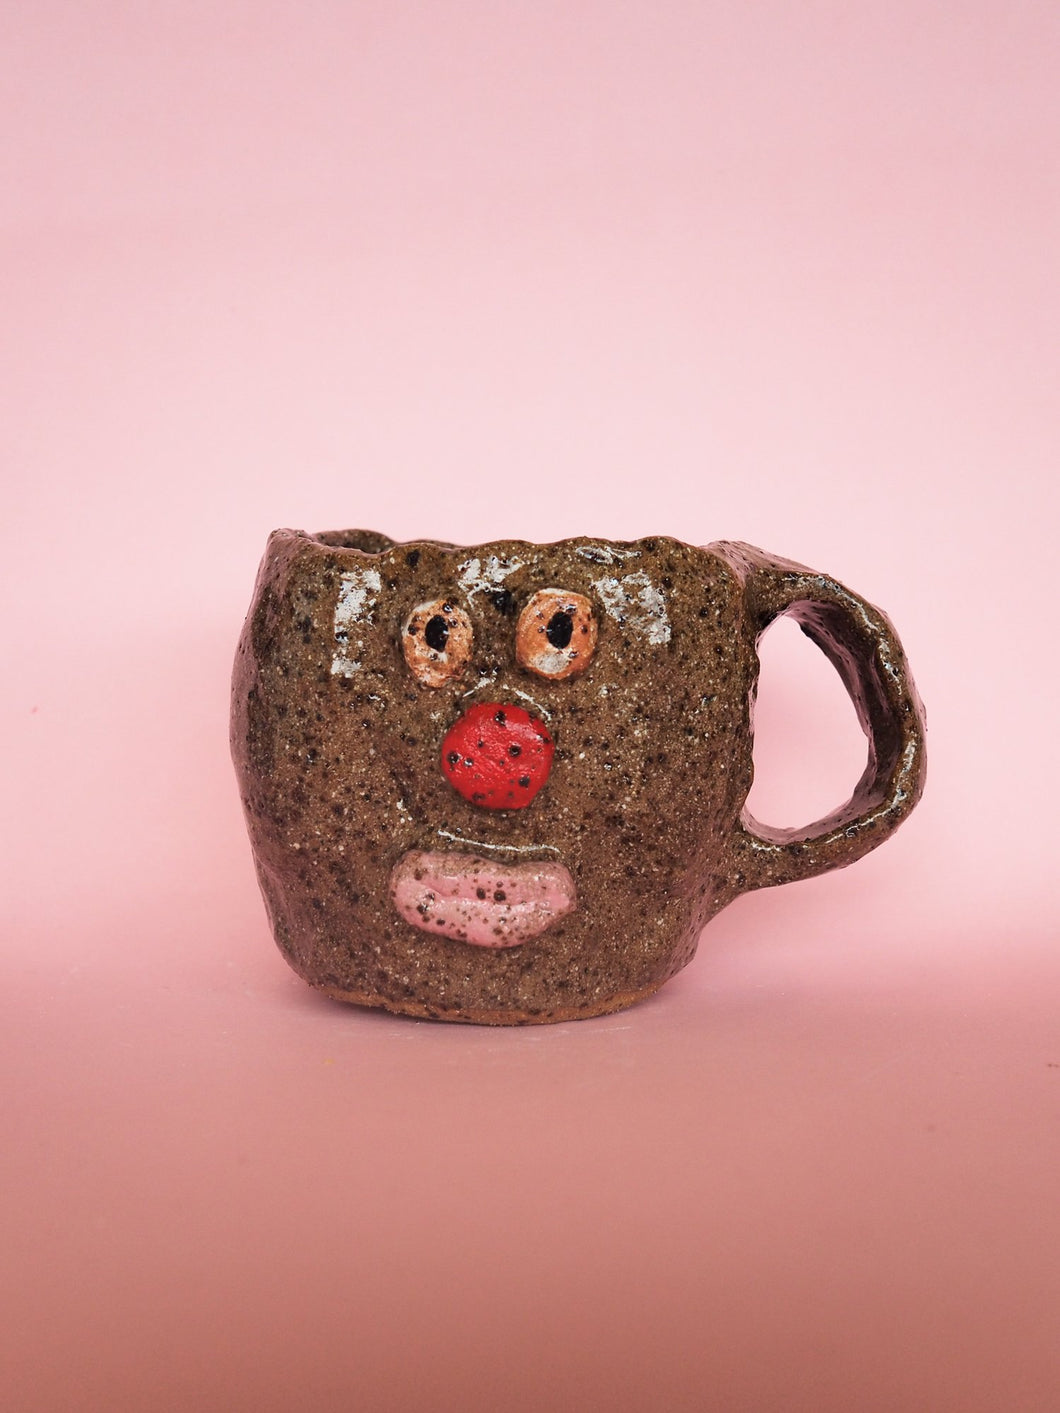 Sandy choccie mug w red nose and pink lips